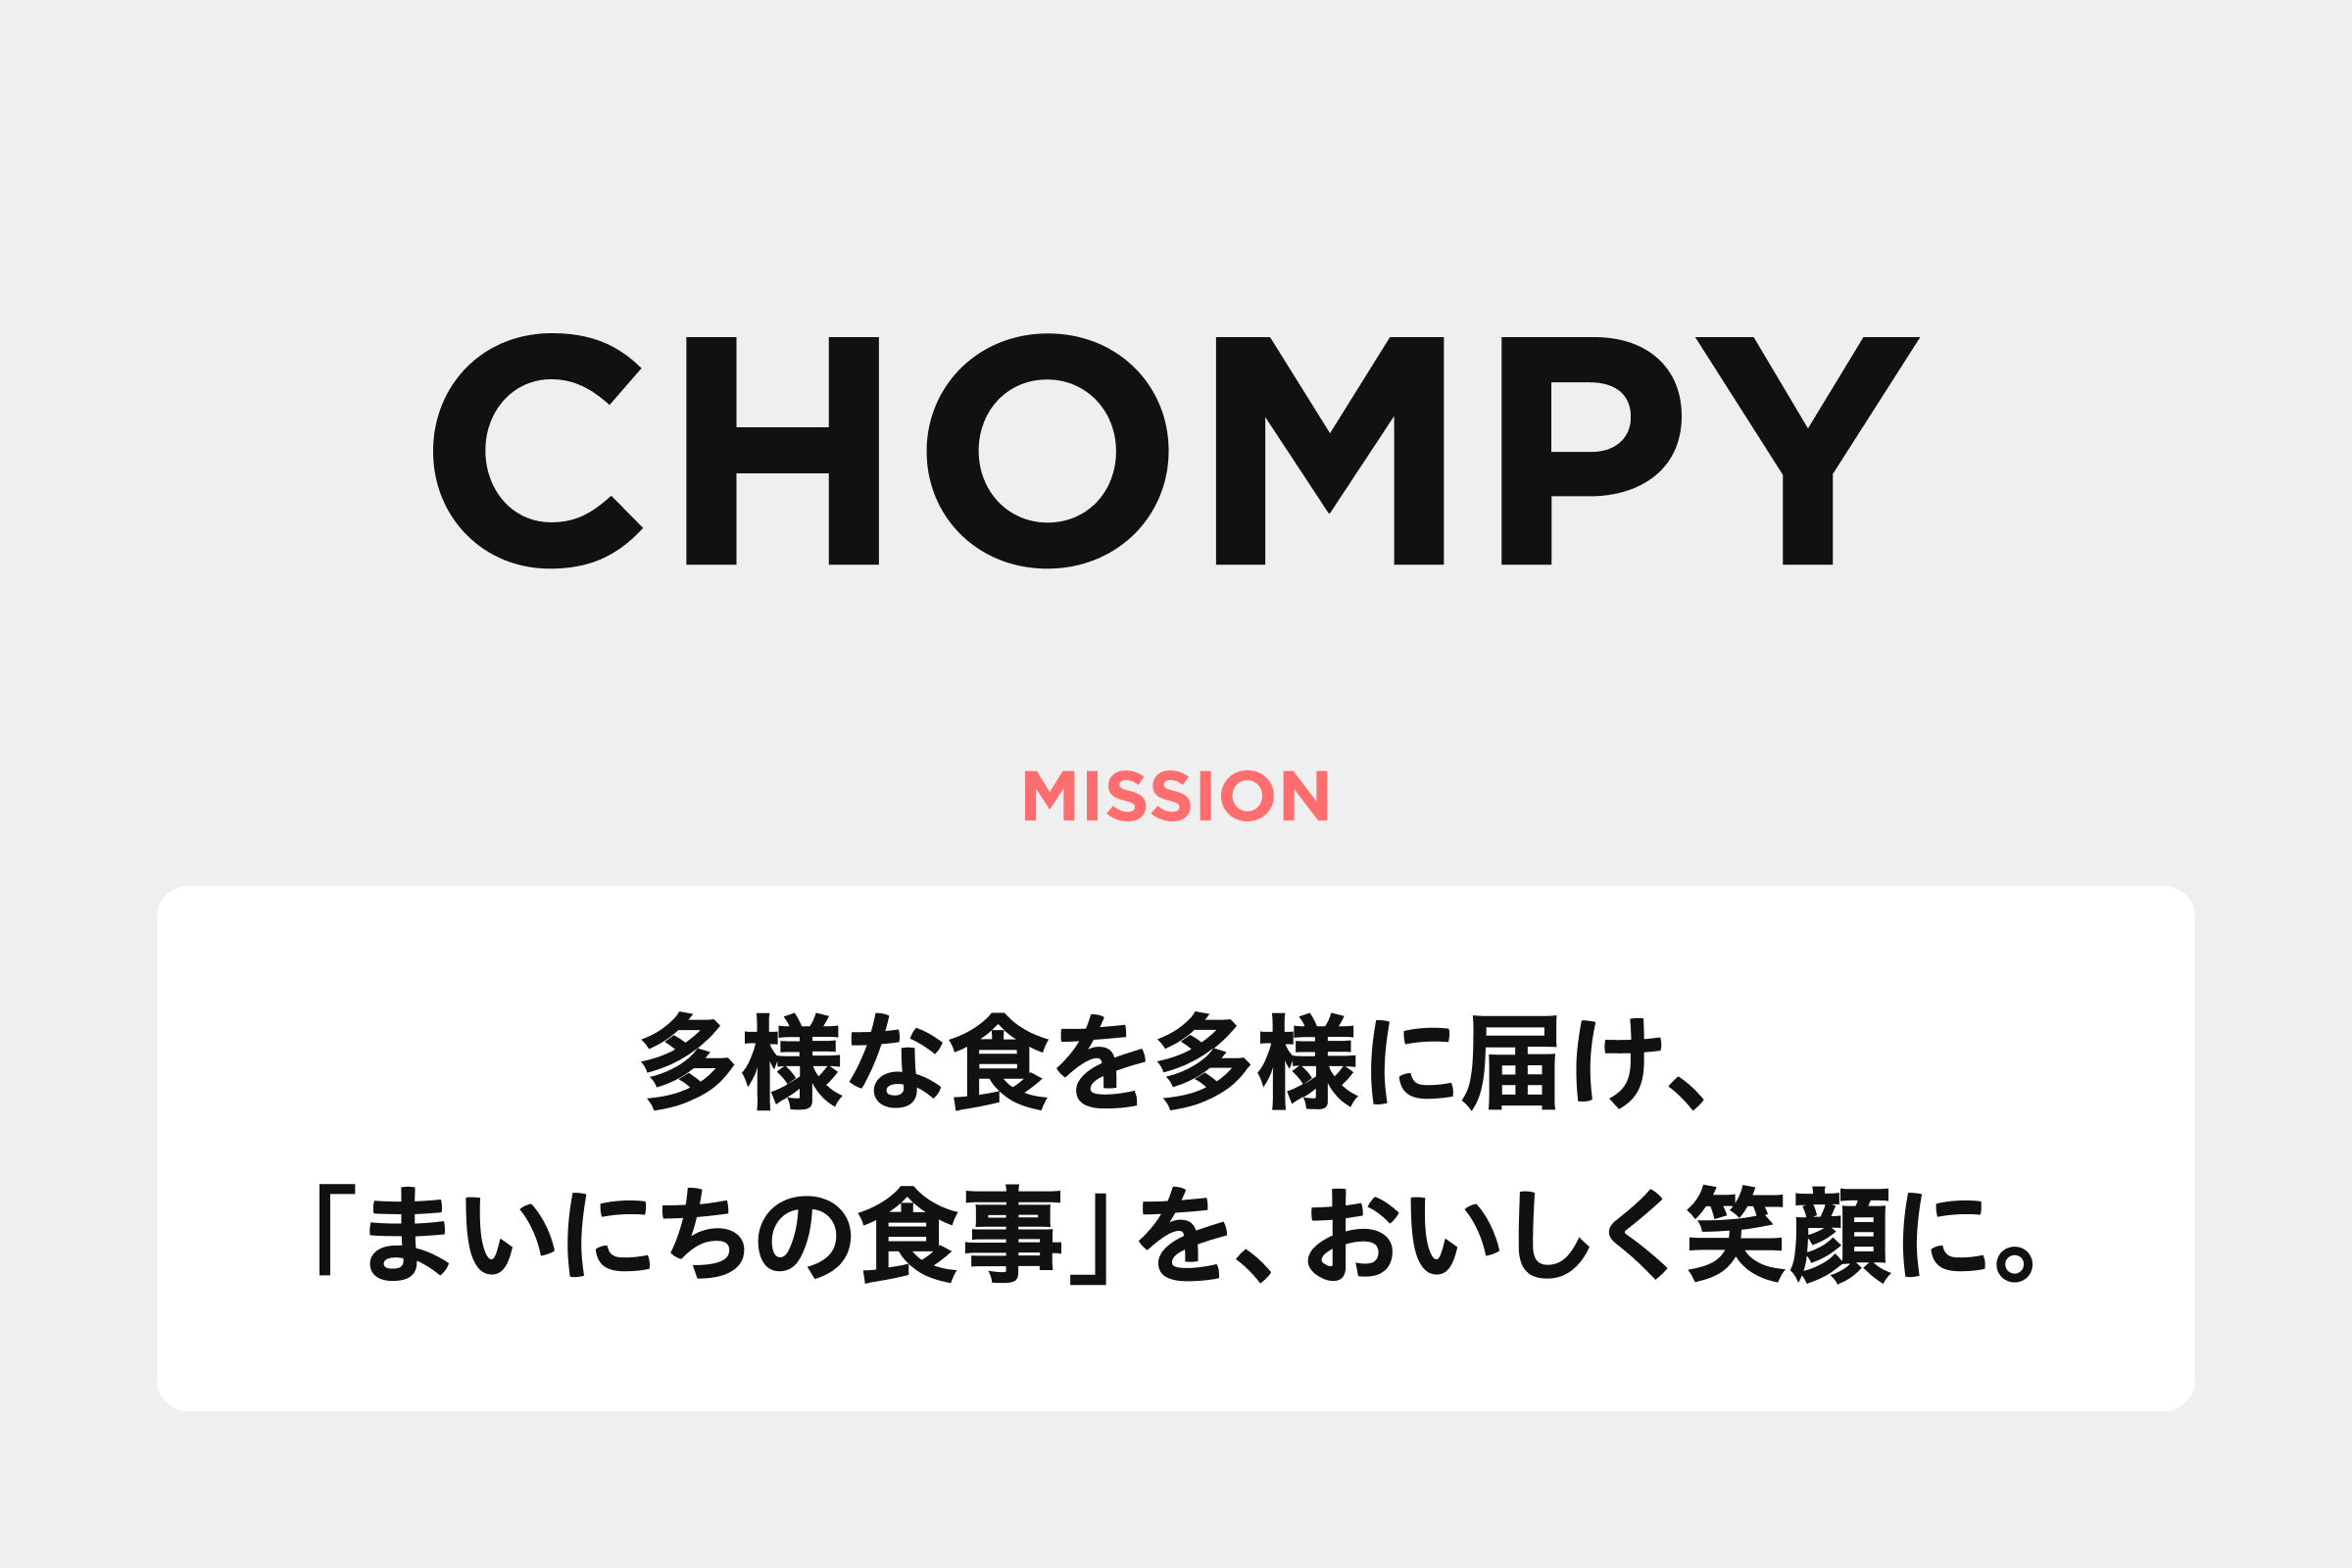 Chompy チョンピー 約7 8億円の資金調達完了 飲食小売店のさらなるエンパワーメントに向け 経営体制を強化し 第二創業期 始動 株式会社chompyのプレスリリース